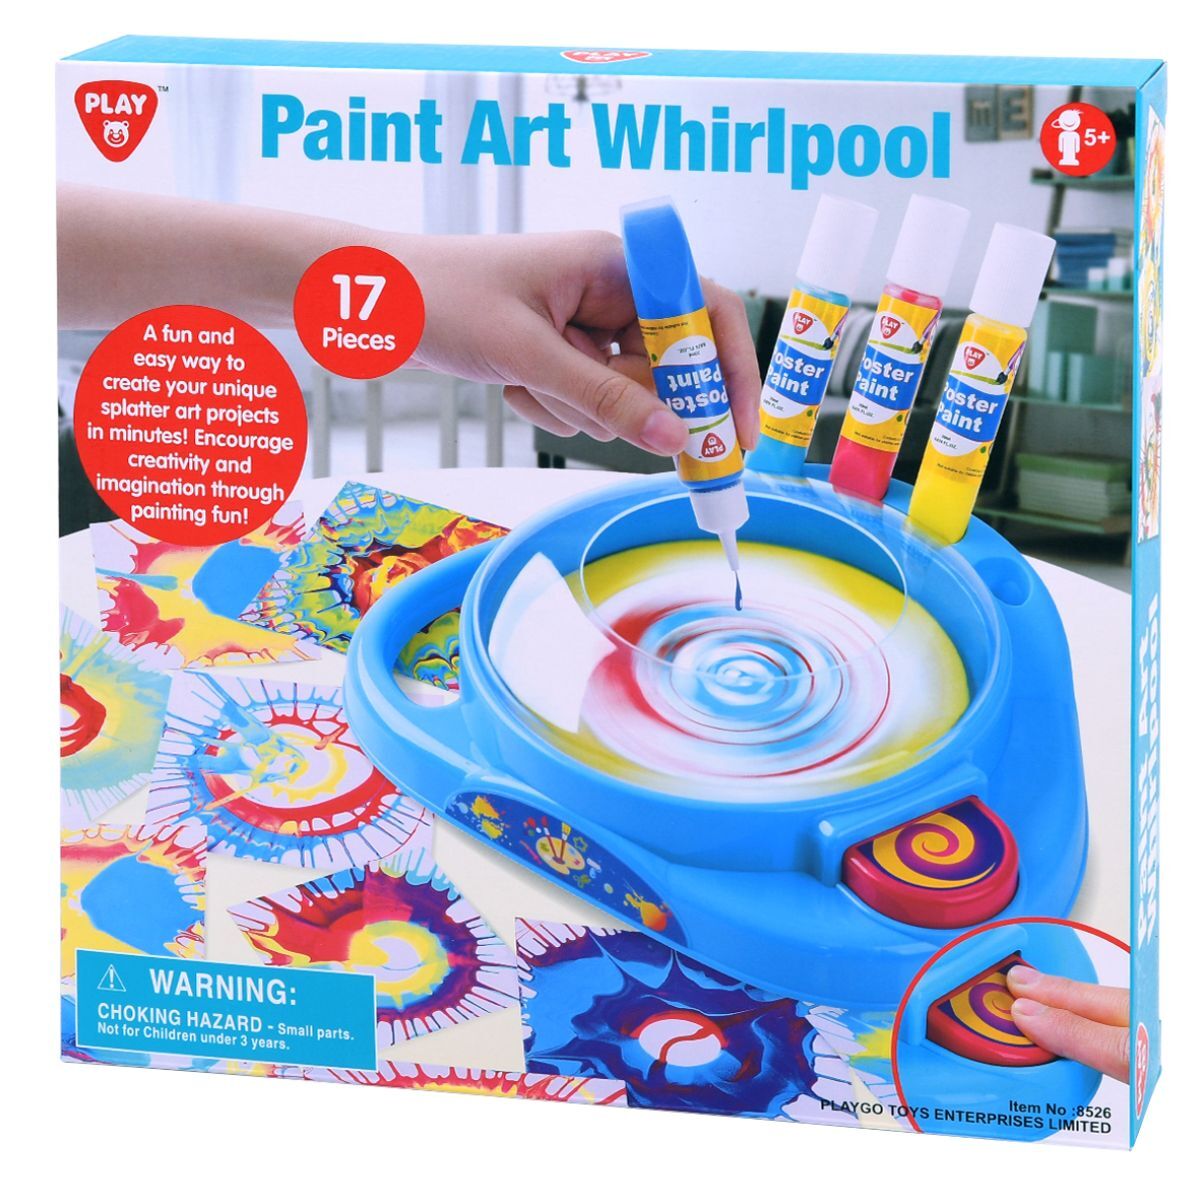 Paint Art Whirlpool